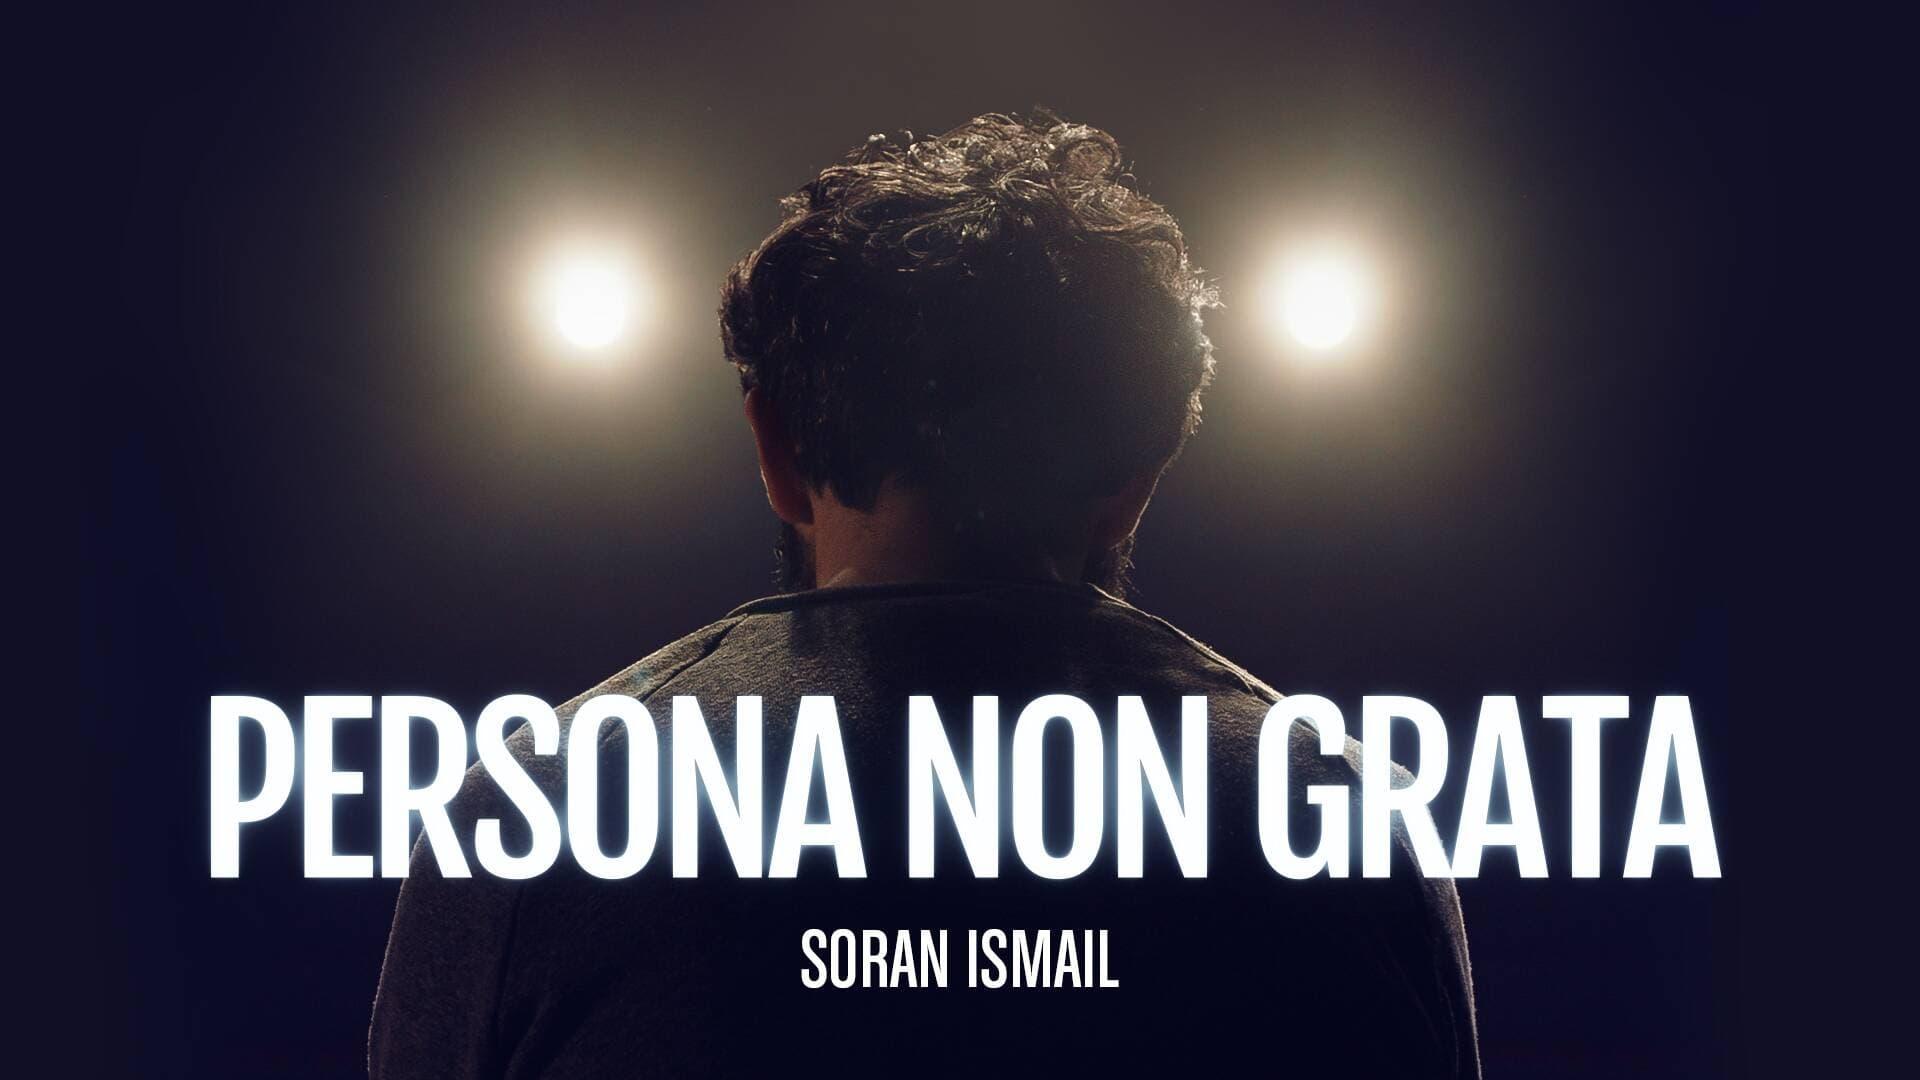 Persona non grata - Soran Ismail backdrop